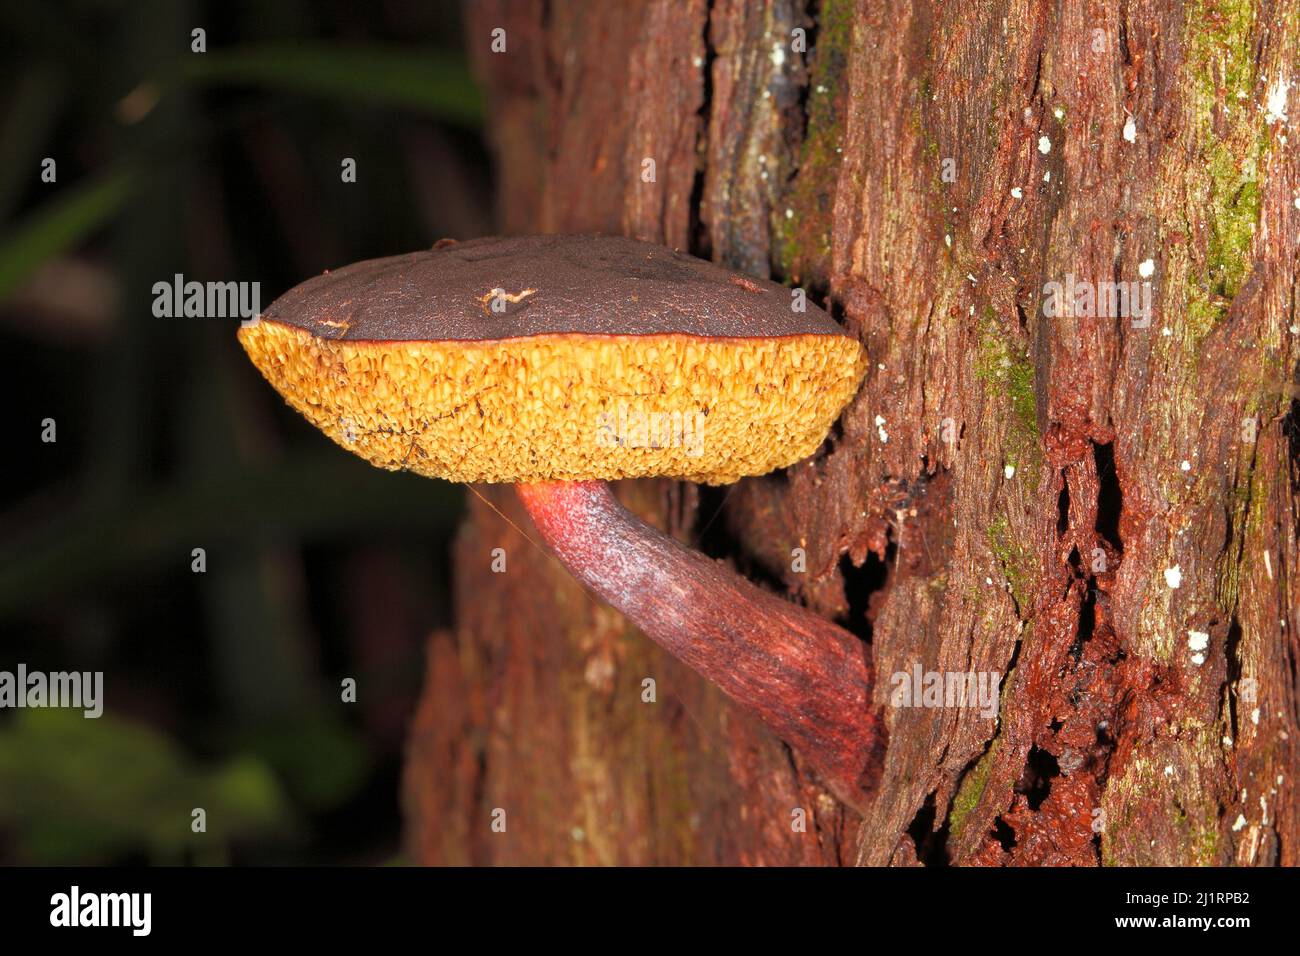 Rhabarber Bolete-Pilze, Boletellus obscurecoccineus. Reifes Exemplar, das die gelben Kiemen zeigt. Coffs Harbour, NSW, Australien Stockfoto